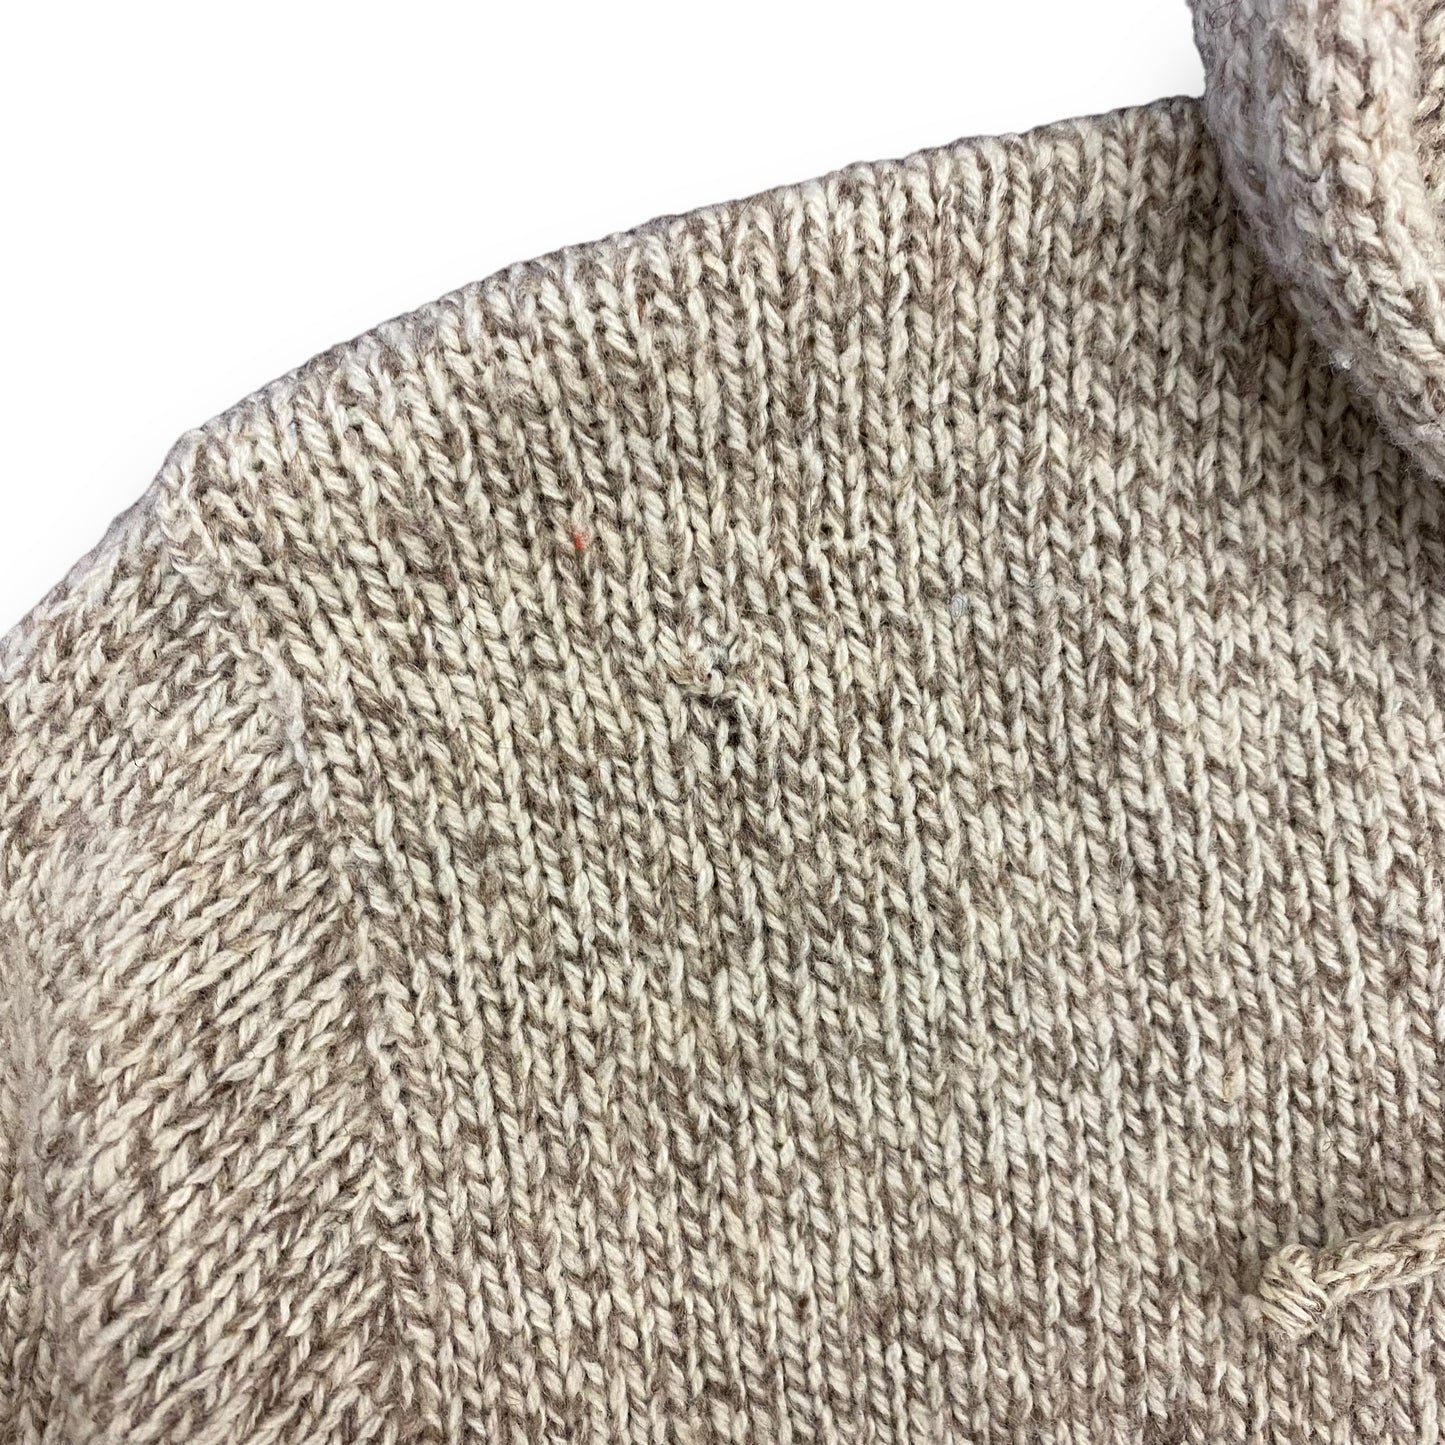 1970s Winona Knits Hooded Sweater - Size XL